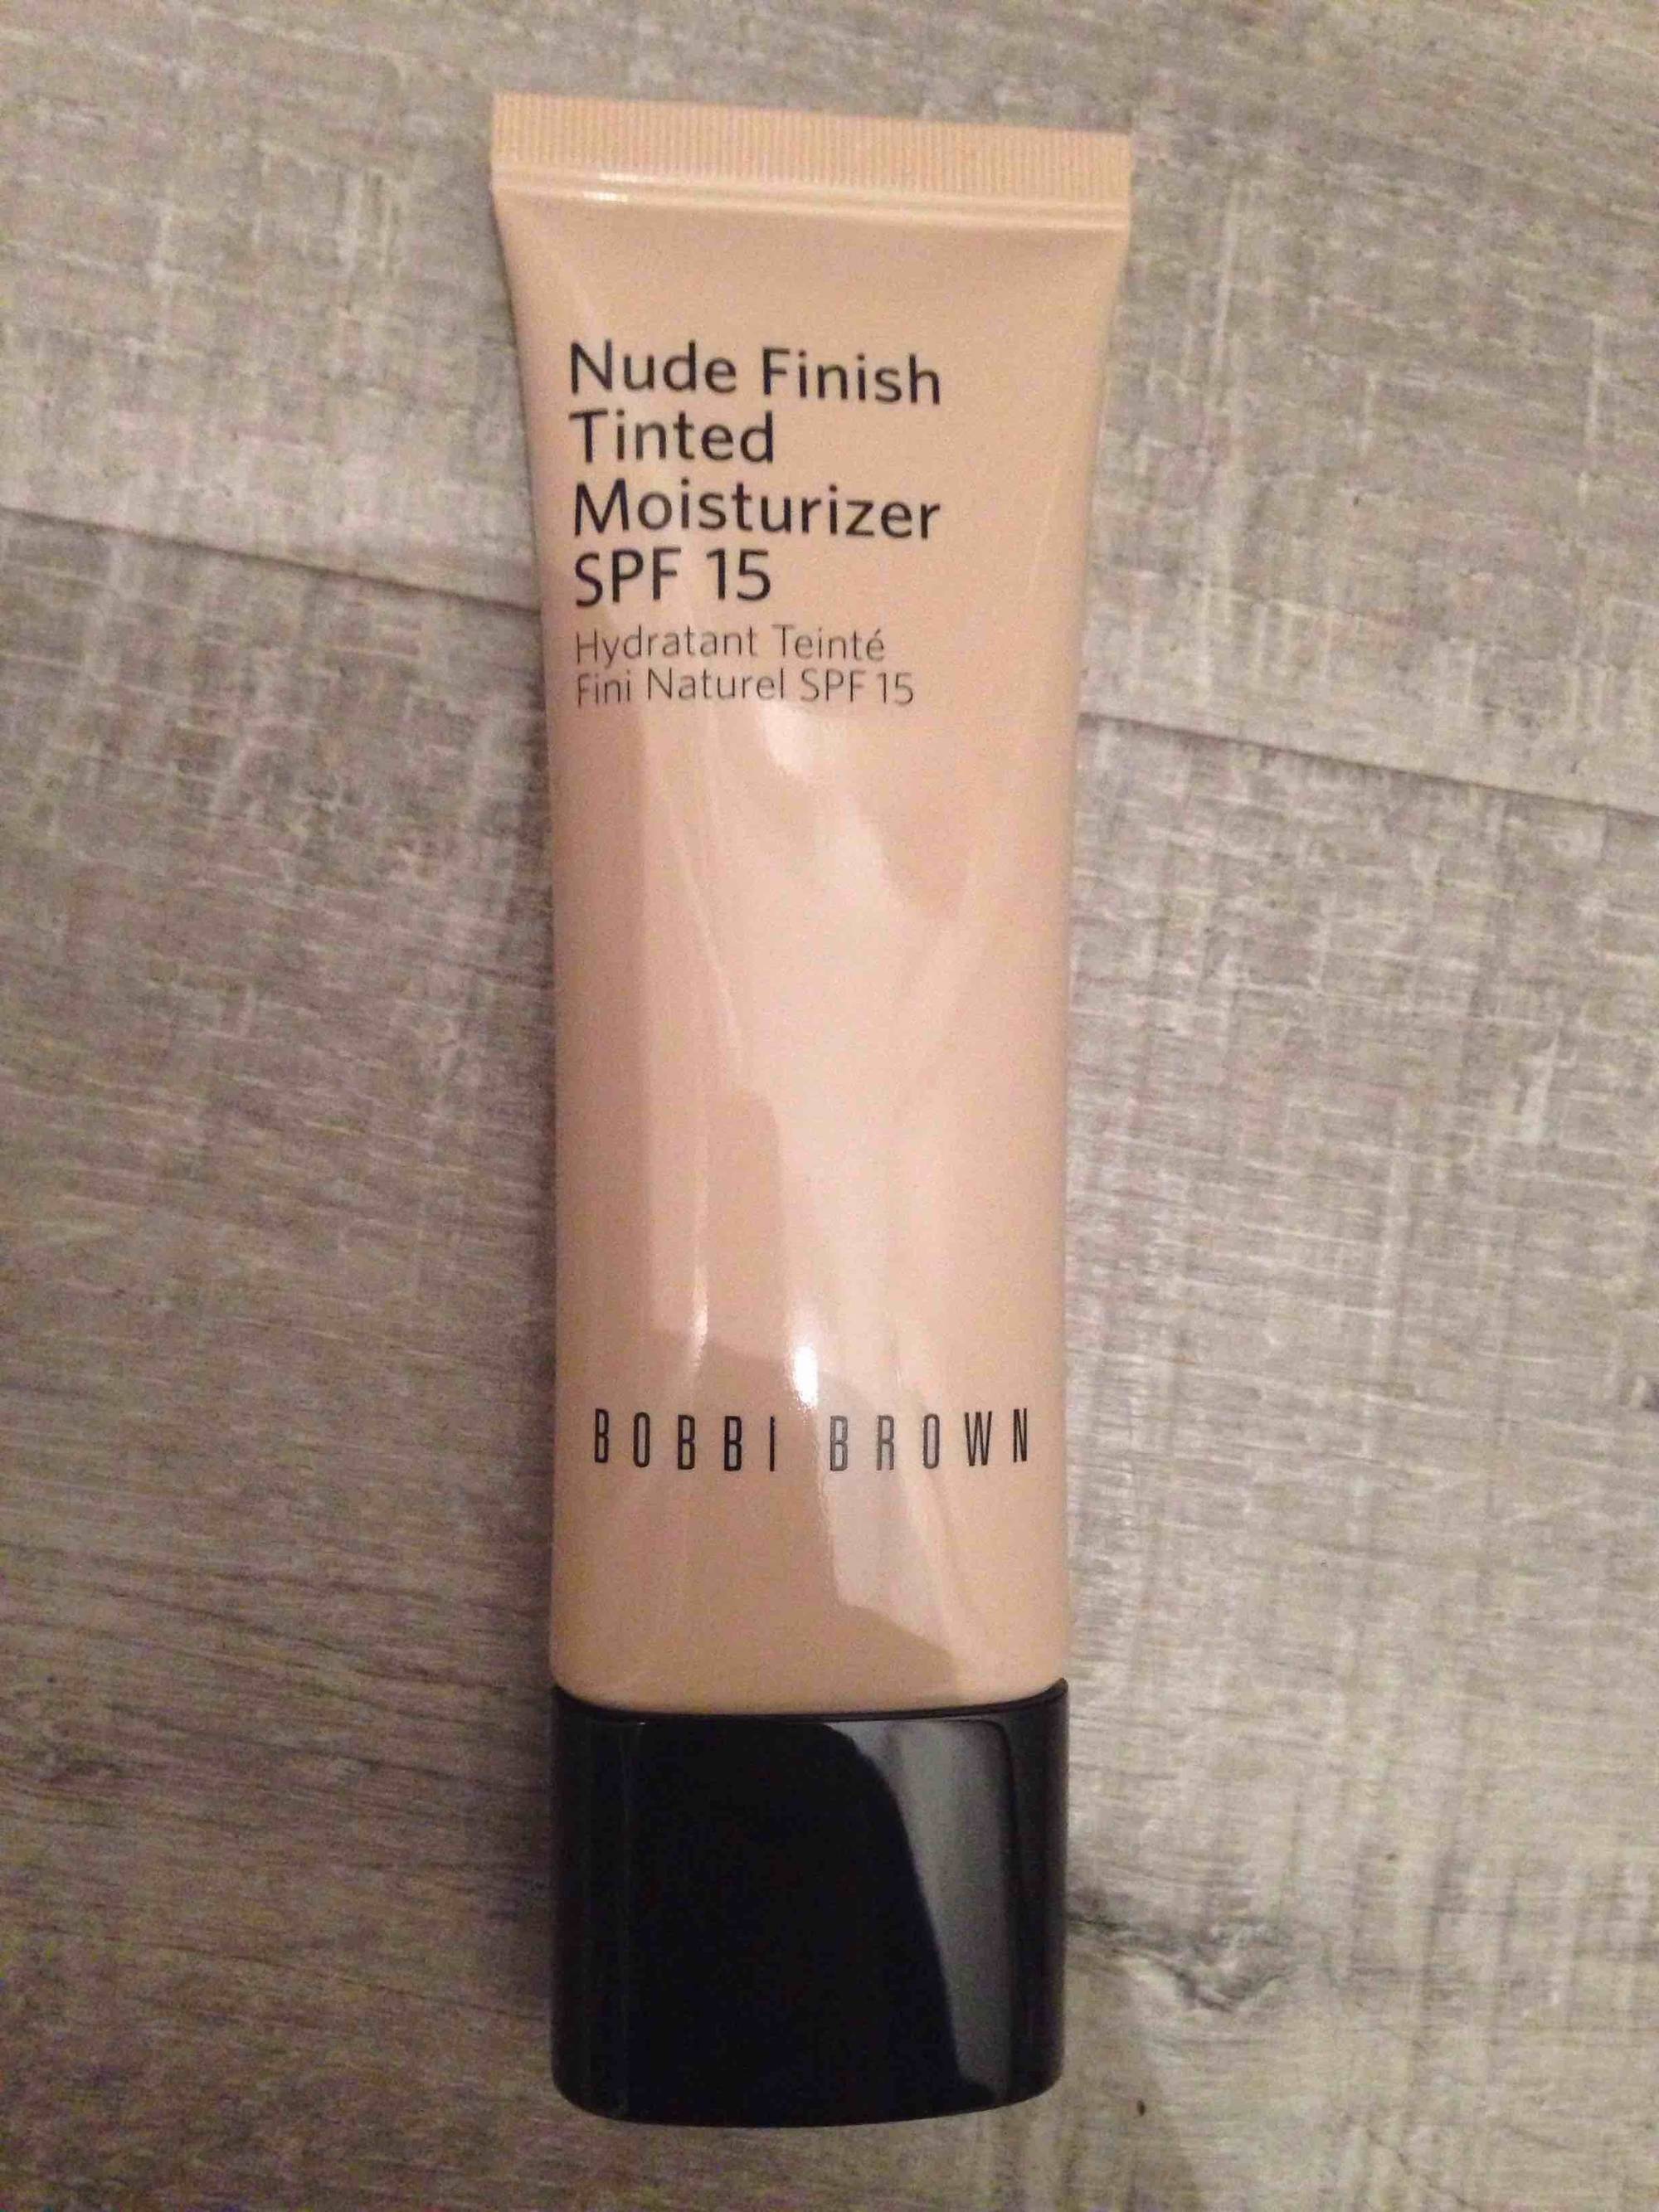 BOBBI BROWN - Nude finish tinted moisturizer SPF 15